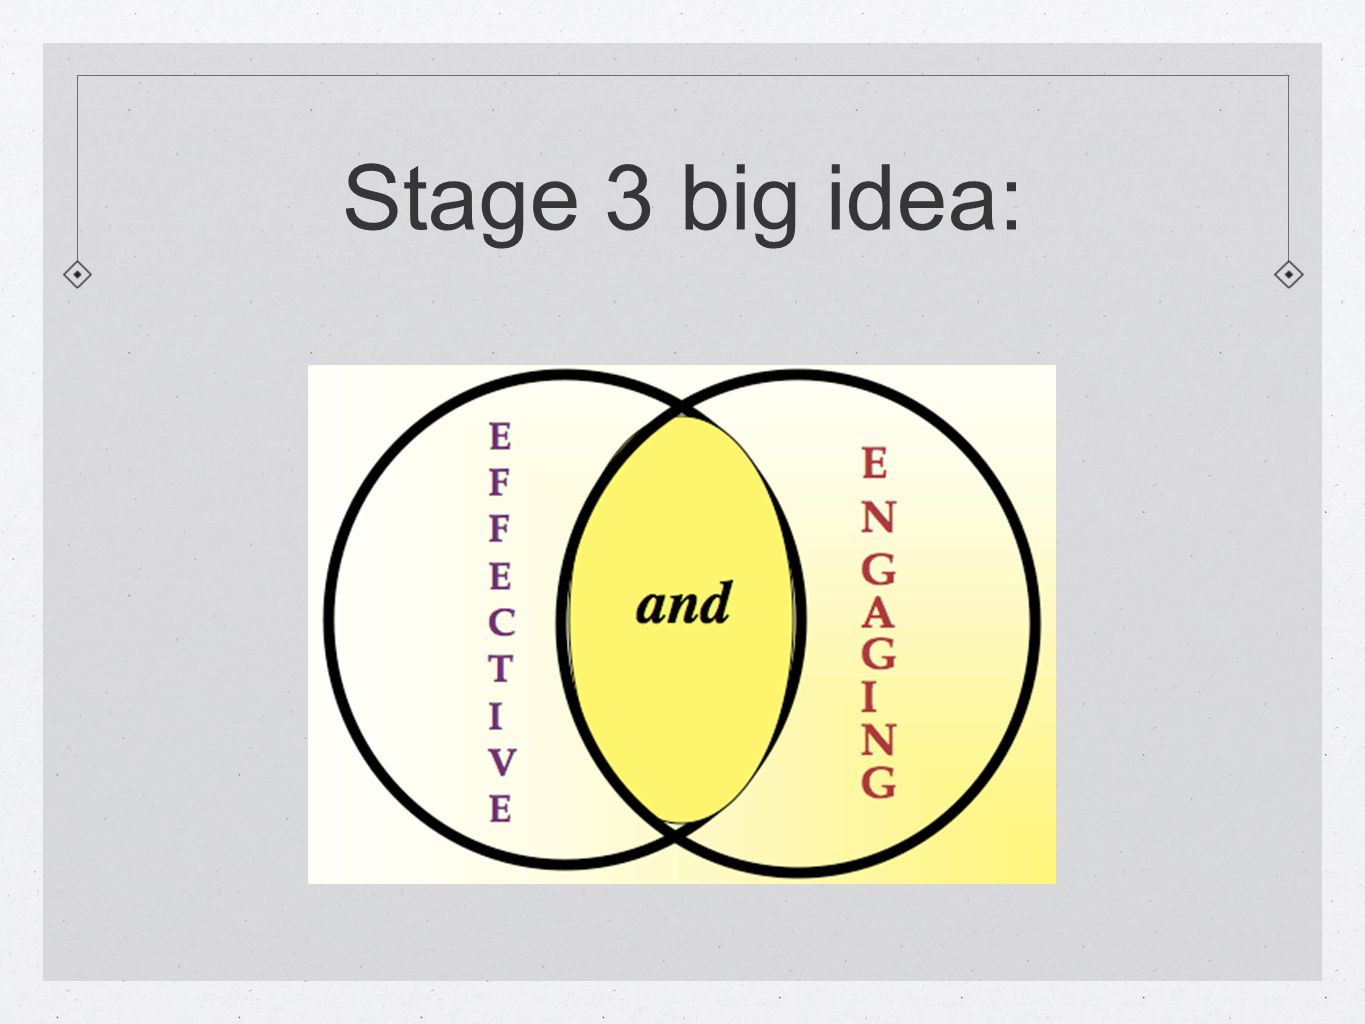 Stage 3 big idea: